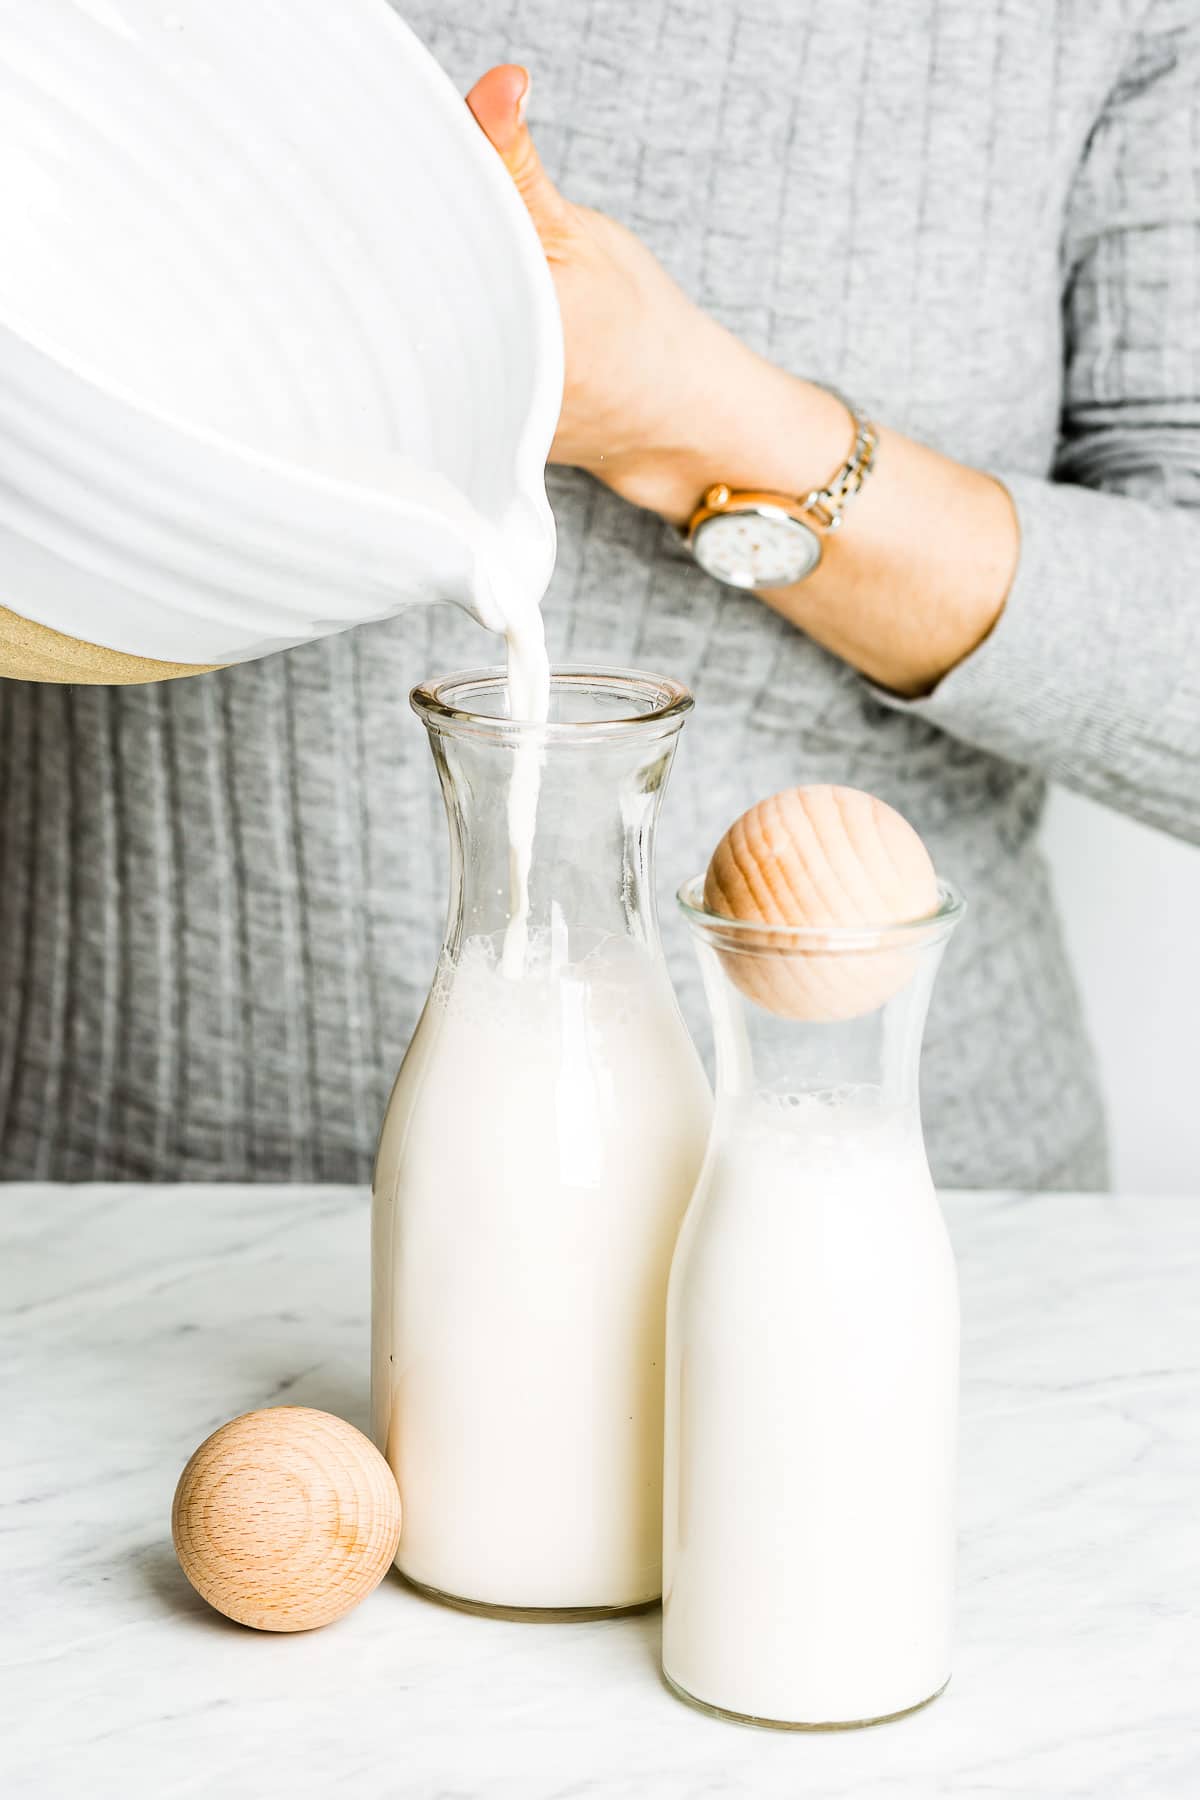 Recipe: Homemade Foamable Almond Milk